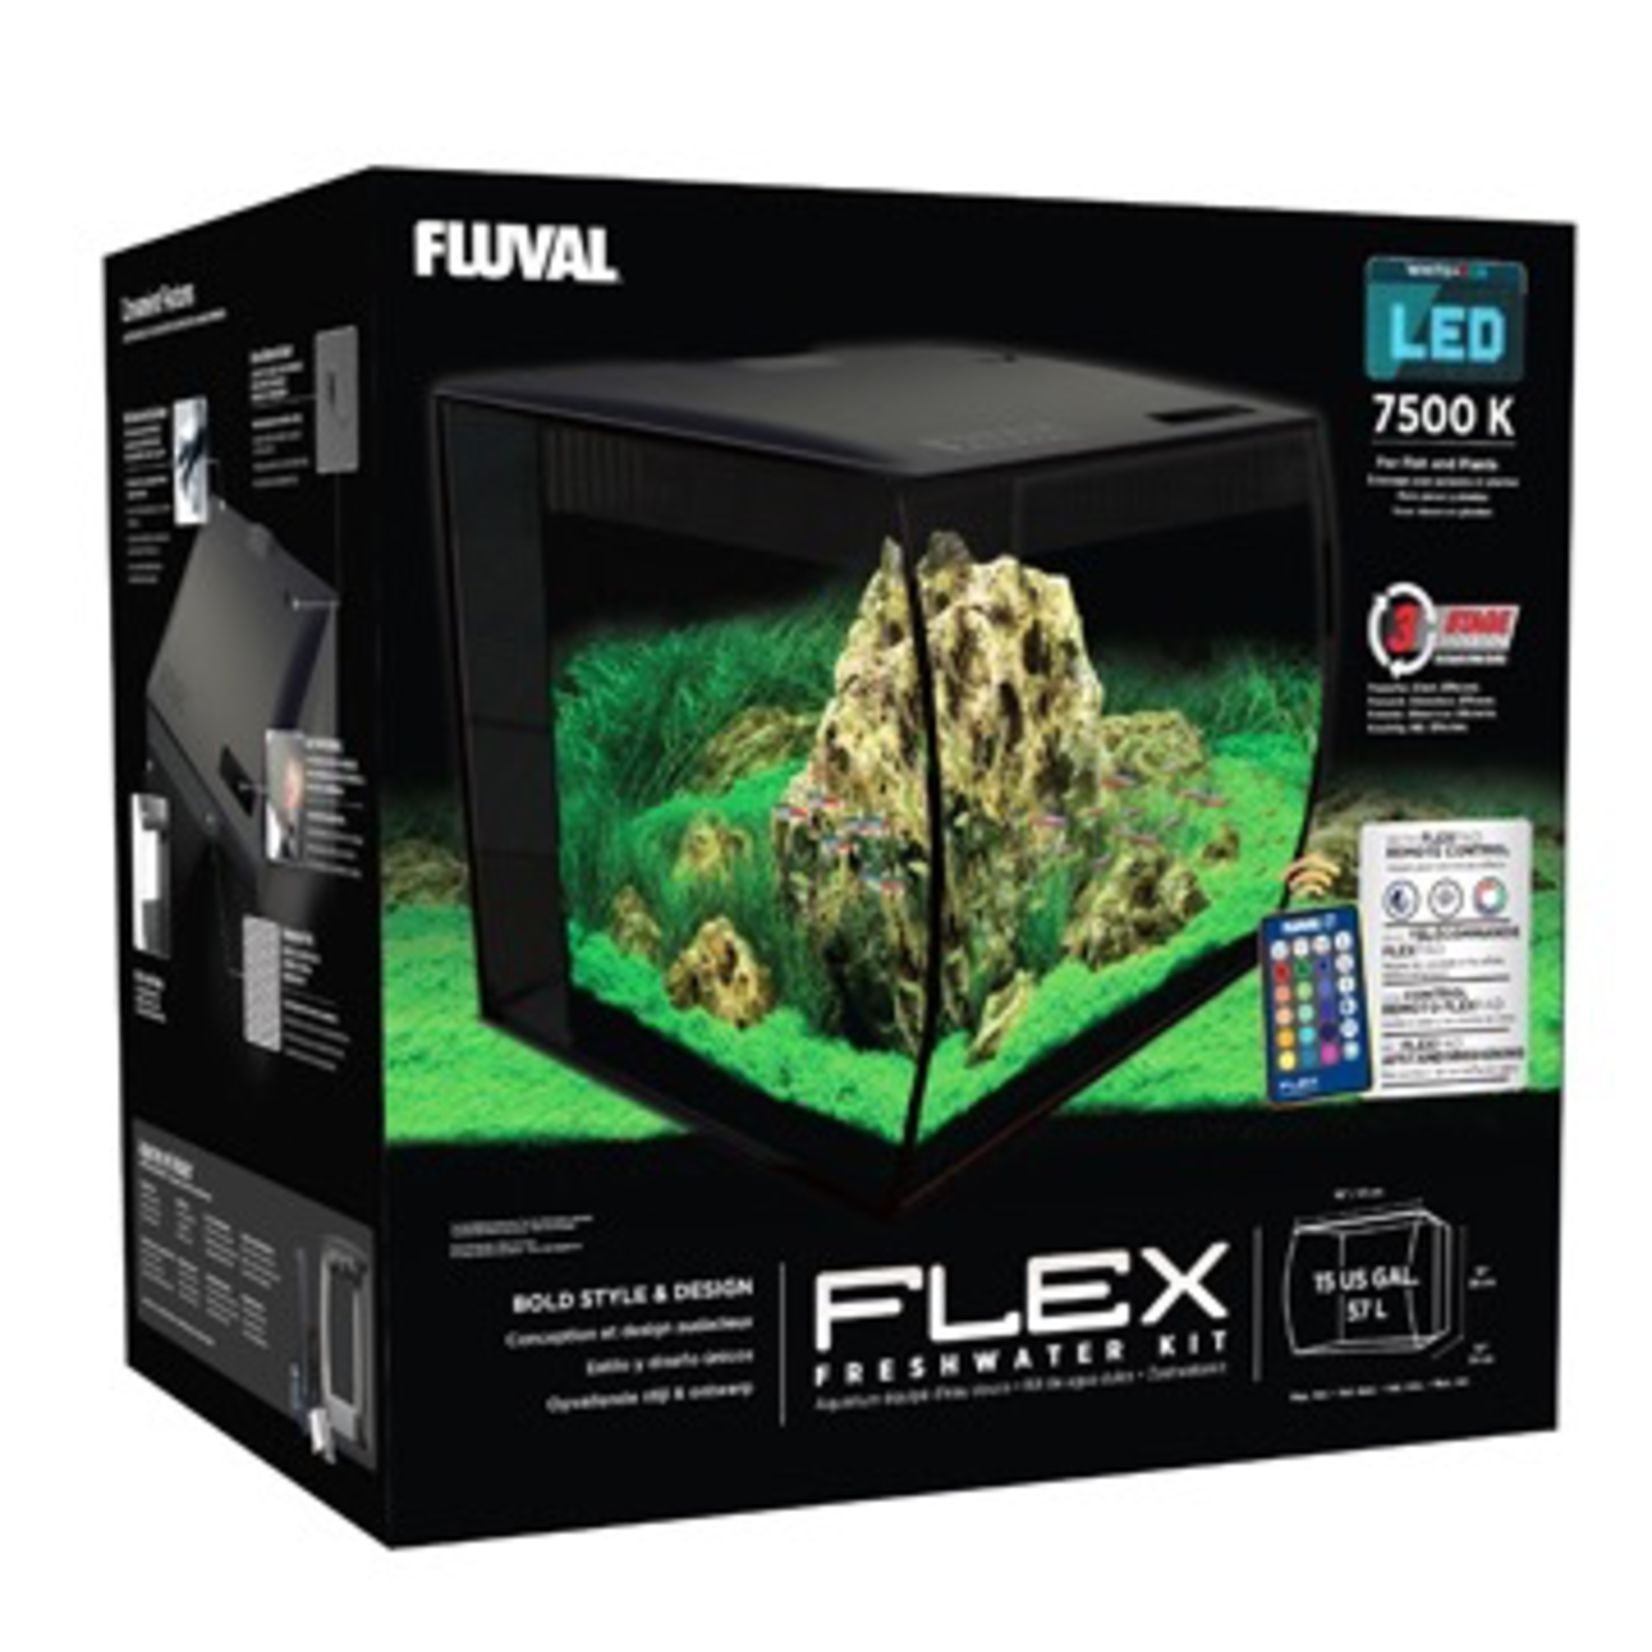 FLUVAL (W) Fluval FLEX Aquarium Kit - 57 L (15 US gal)